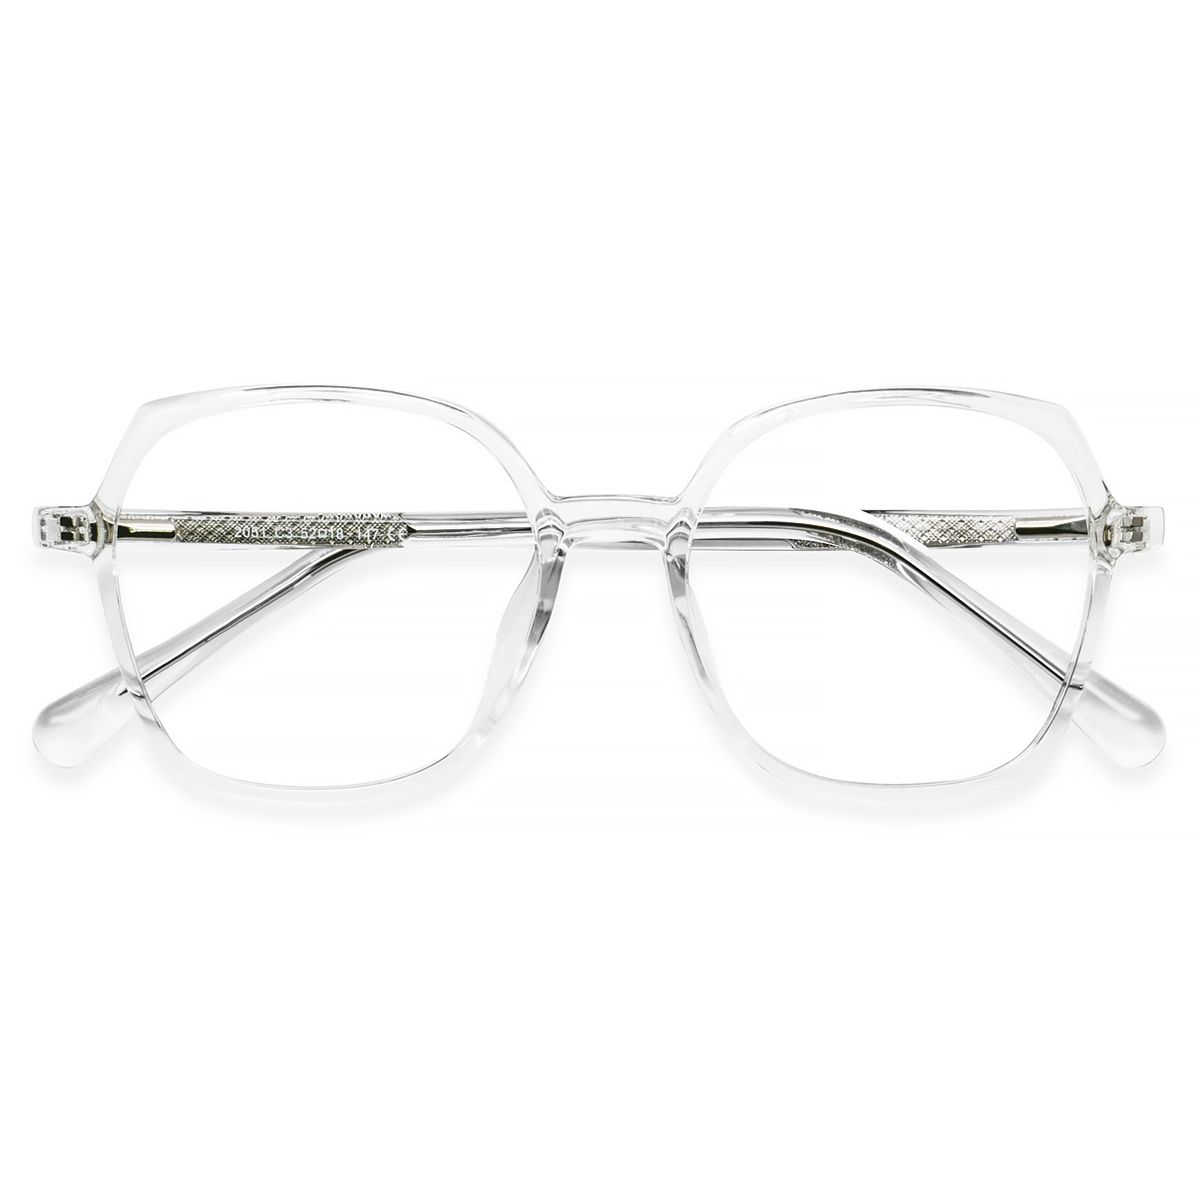 W2051 Round Clear Eyeglasses Frames | Leoptique